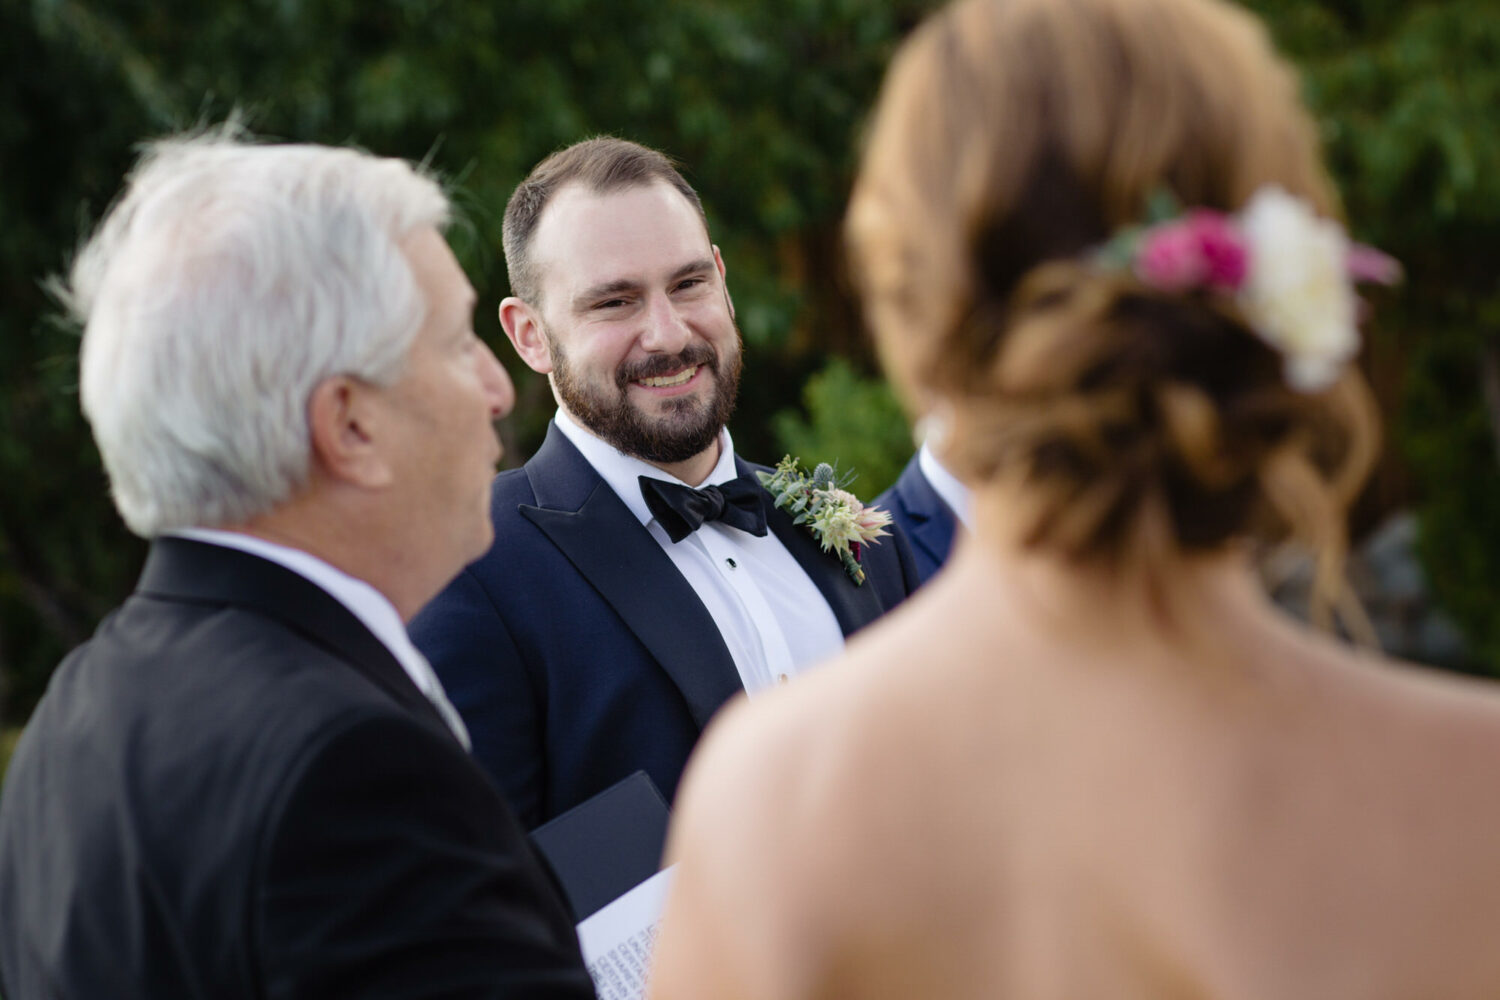 A groom wears a black bow tie to dress up an outdoor wedding at Gar Woods.